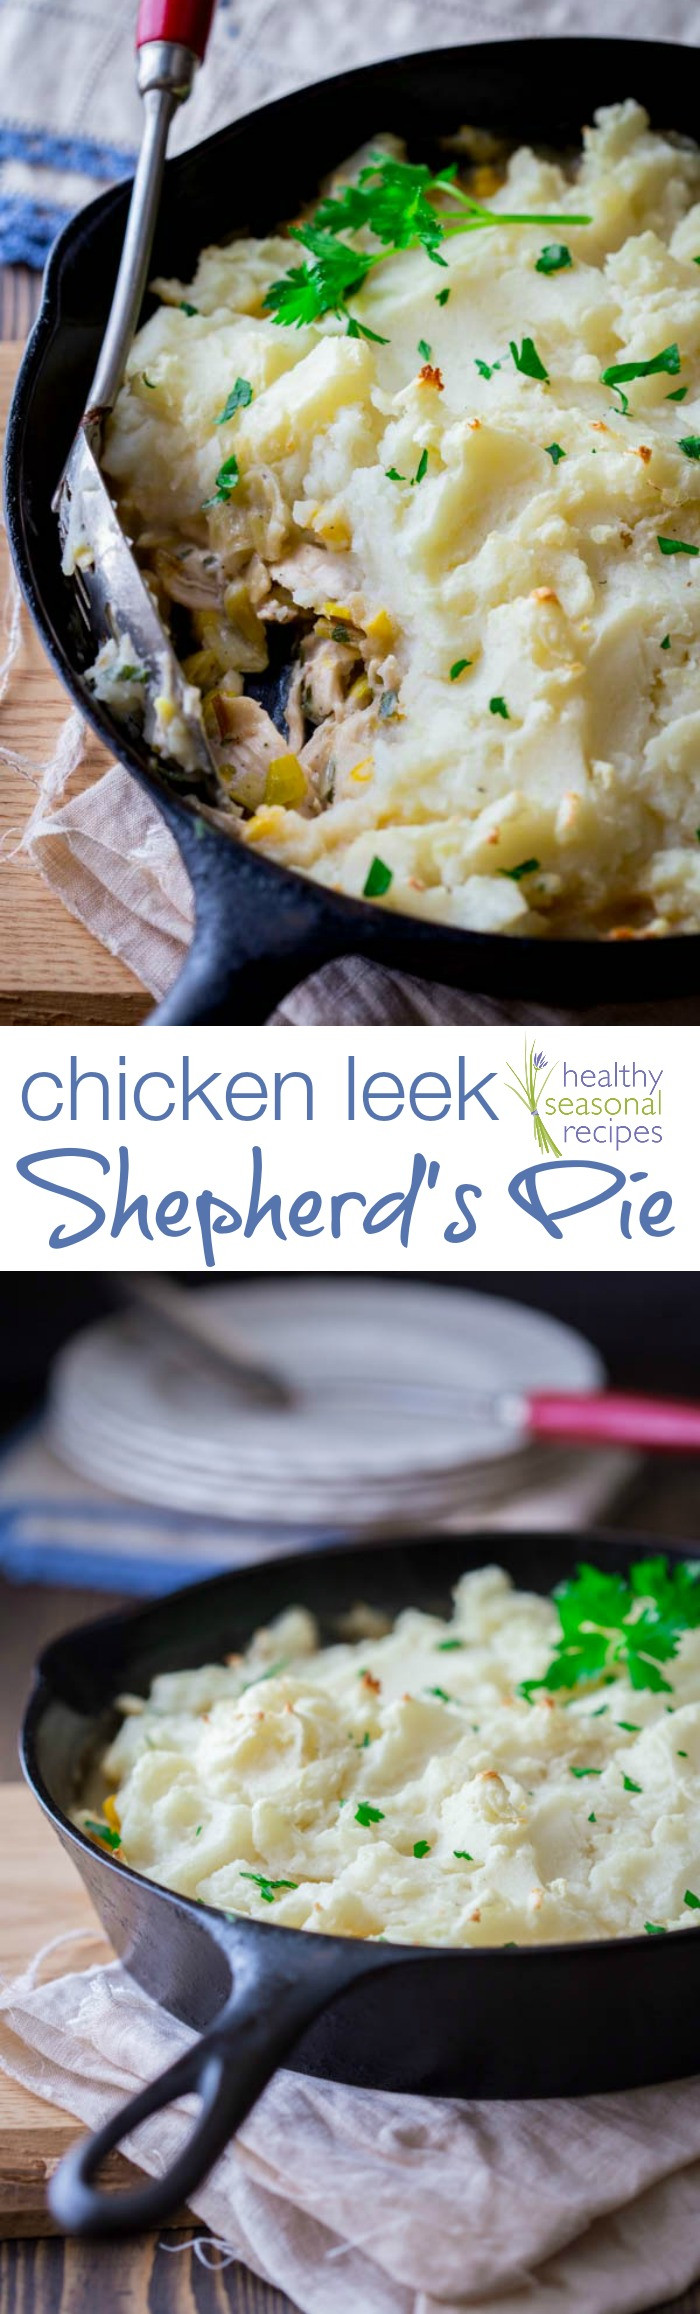 Healthy Shepherd'S Pie Recipe
 chicken leek shepherds pie Healthy Seasonal Recipes